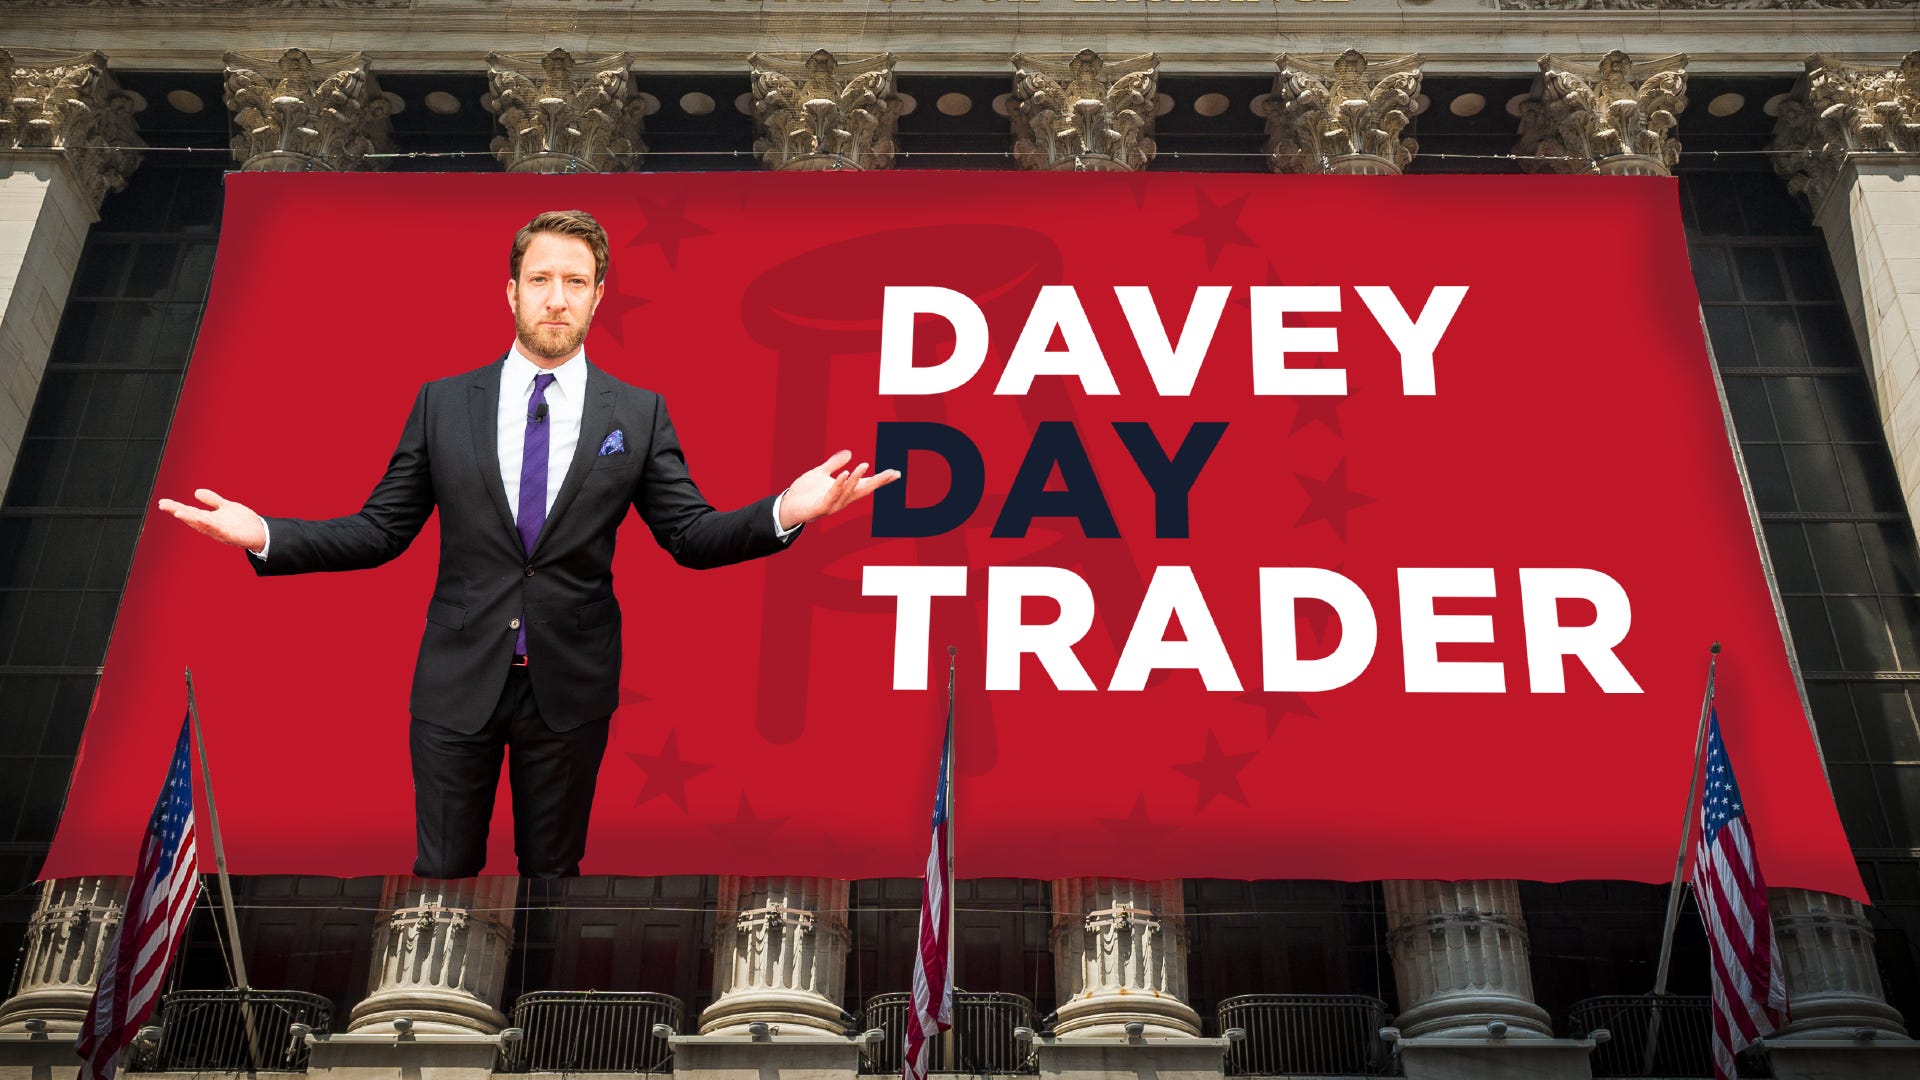 Davey Day Trader – March 27th, 2020